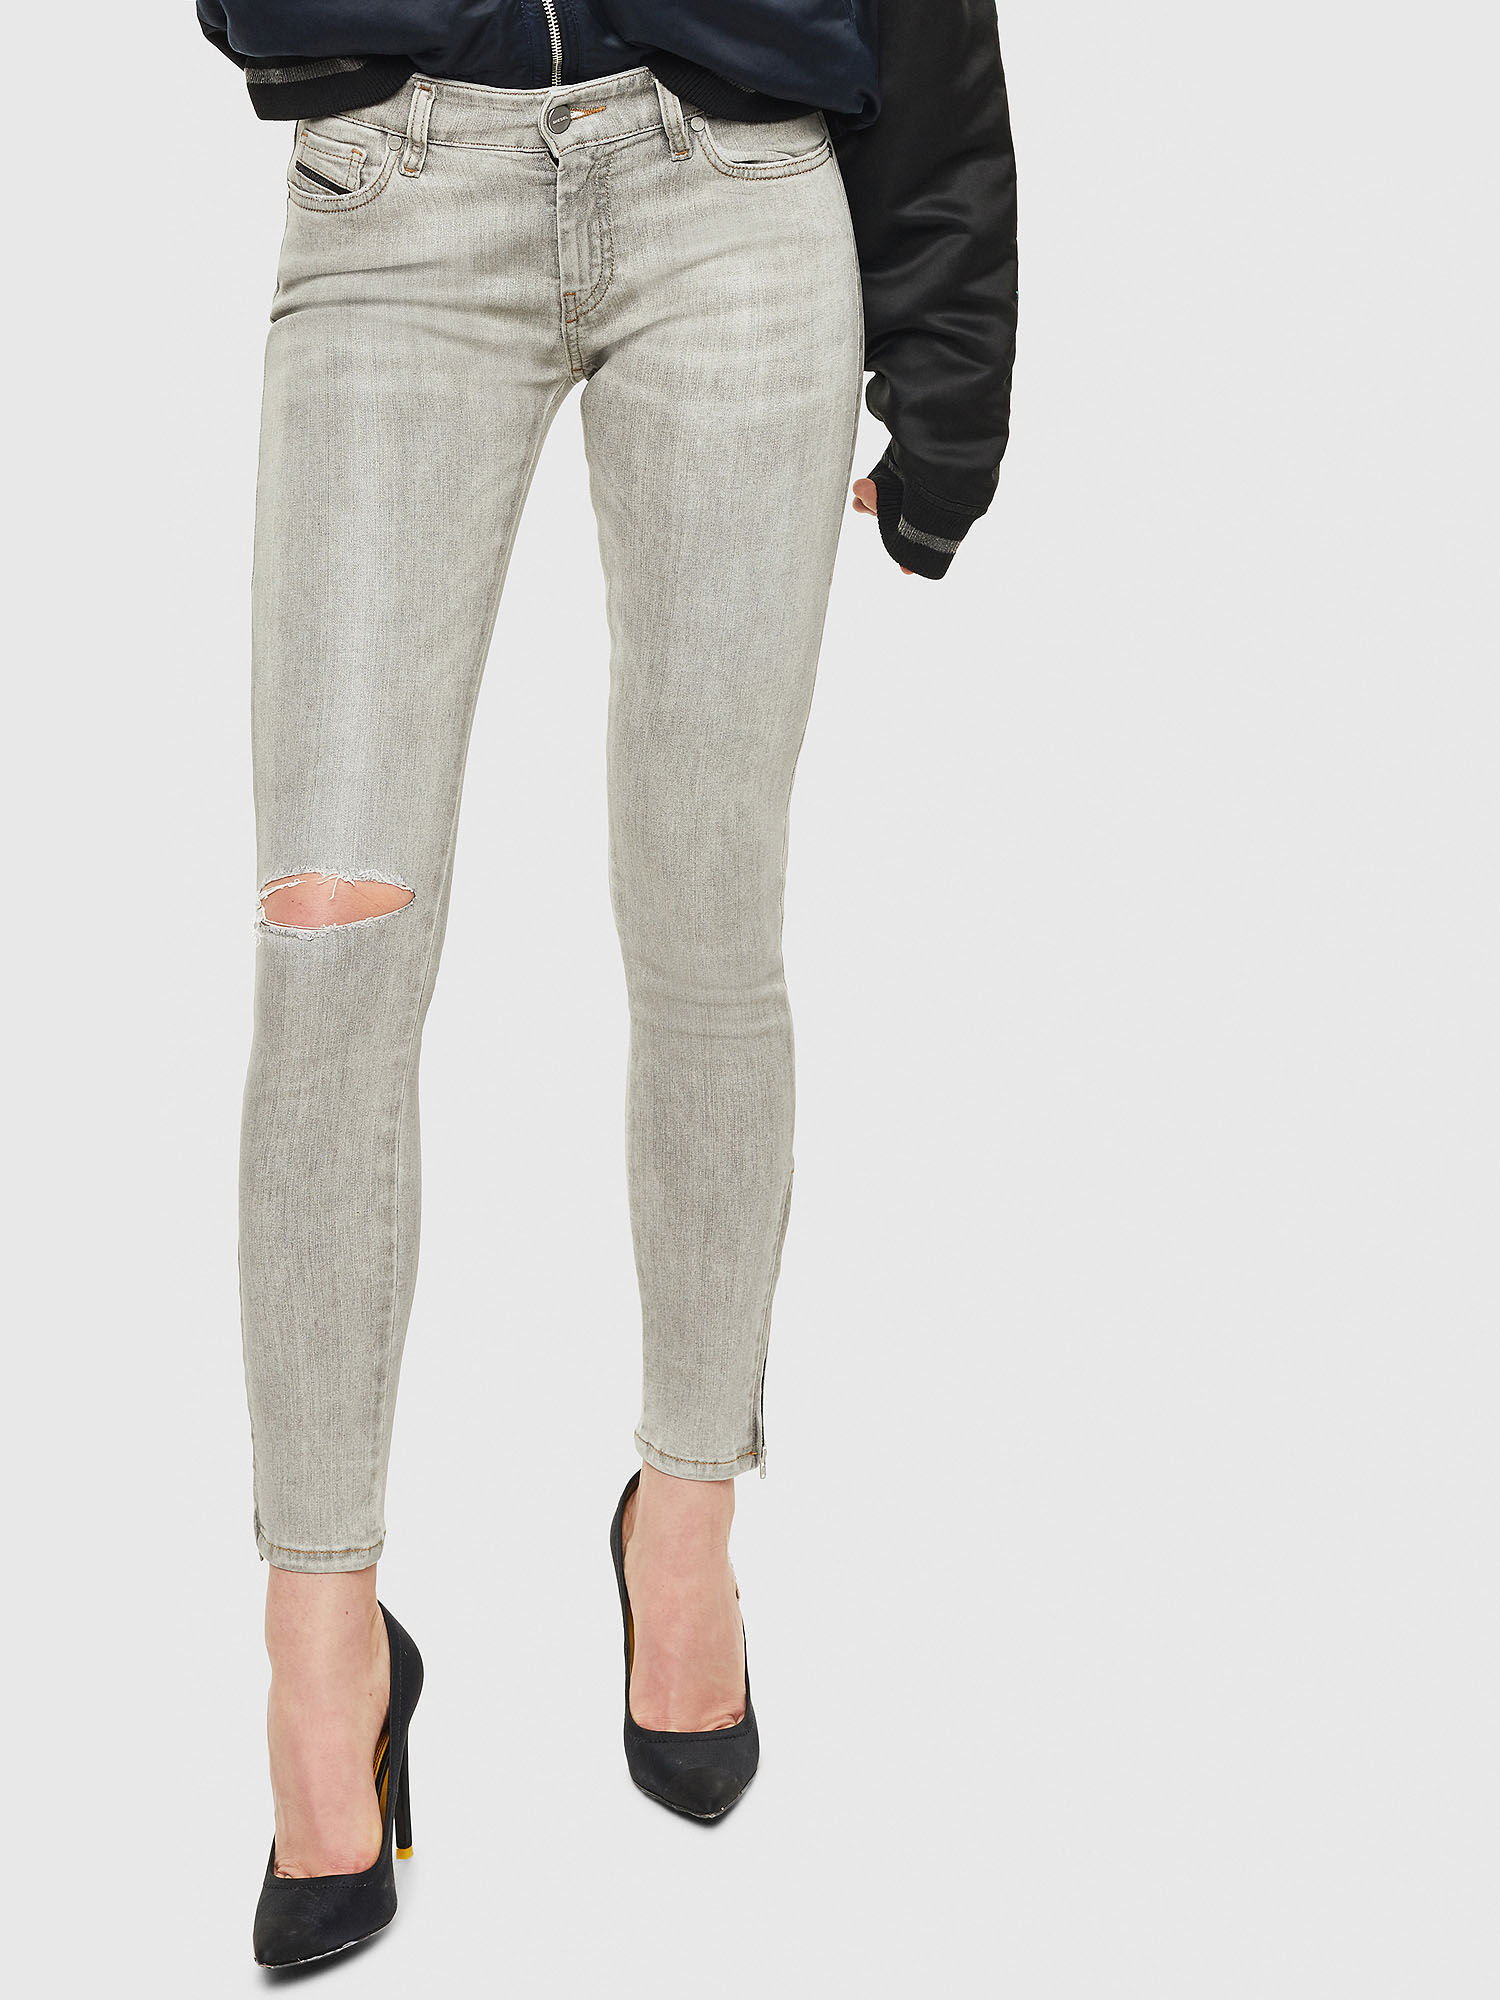 light gray jeans womens